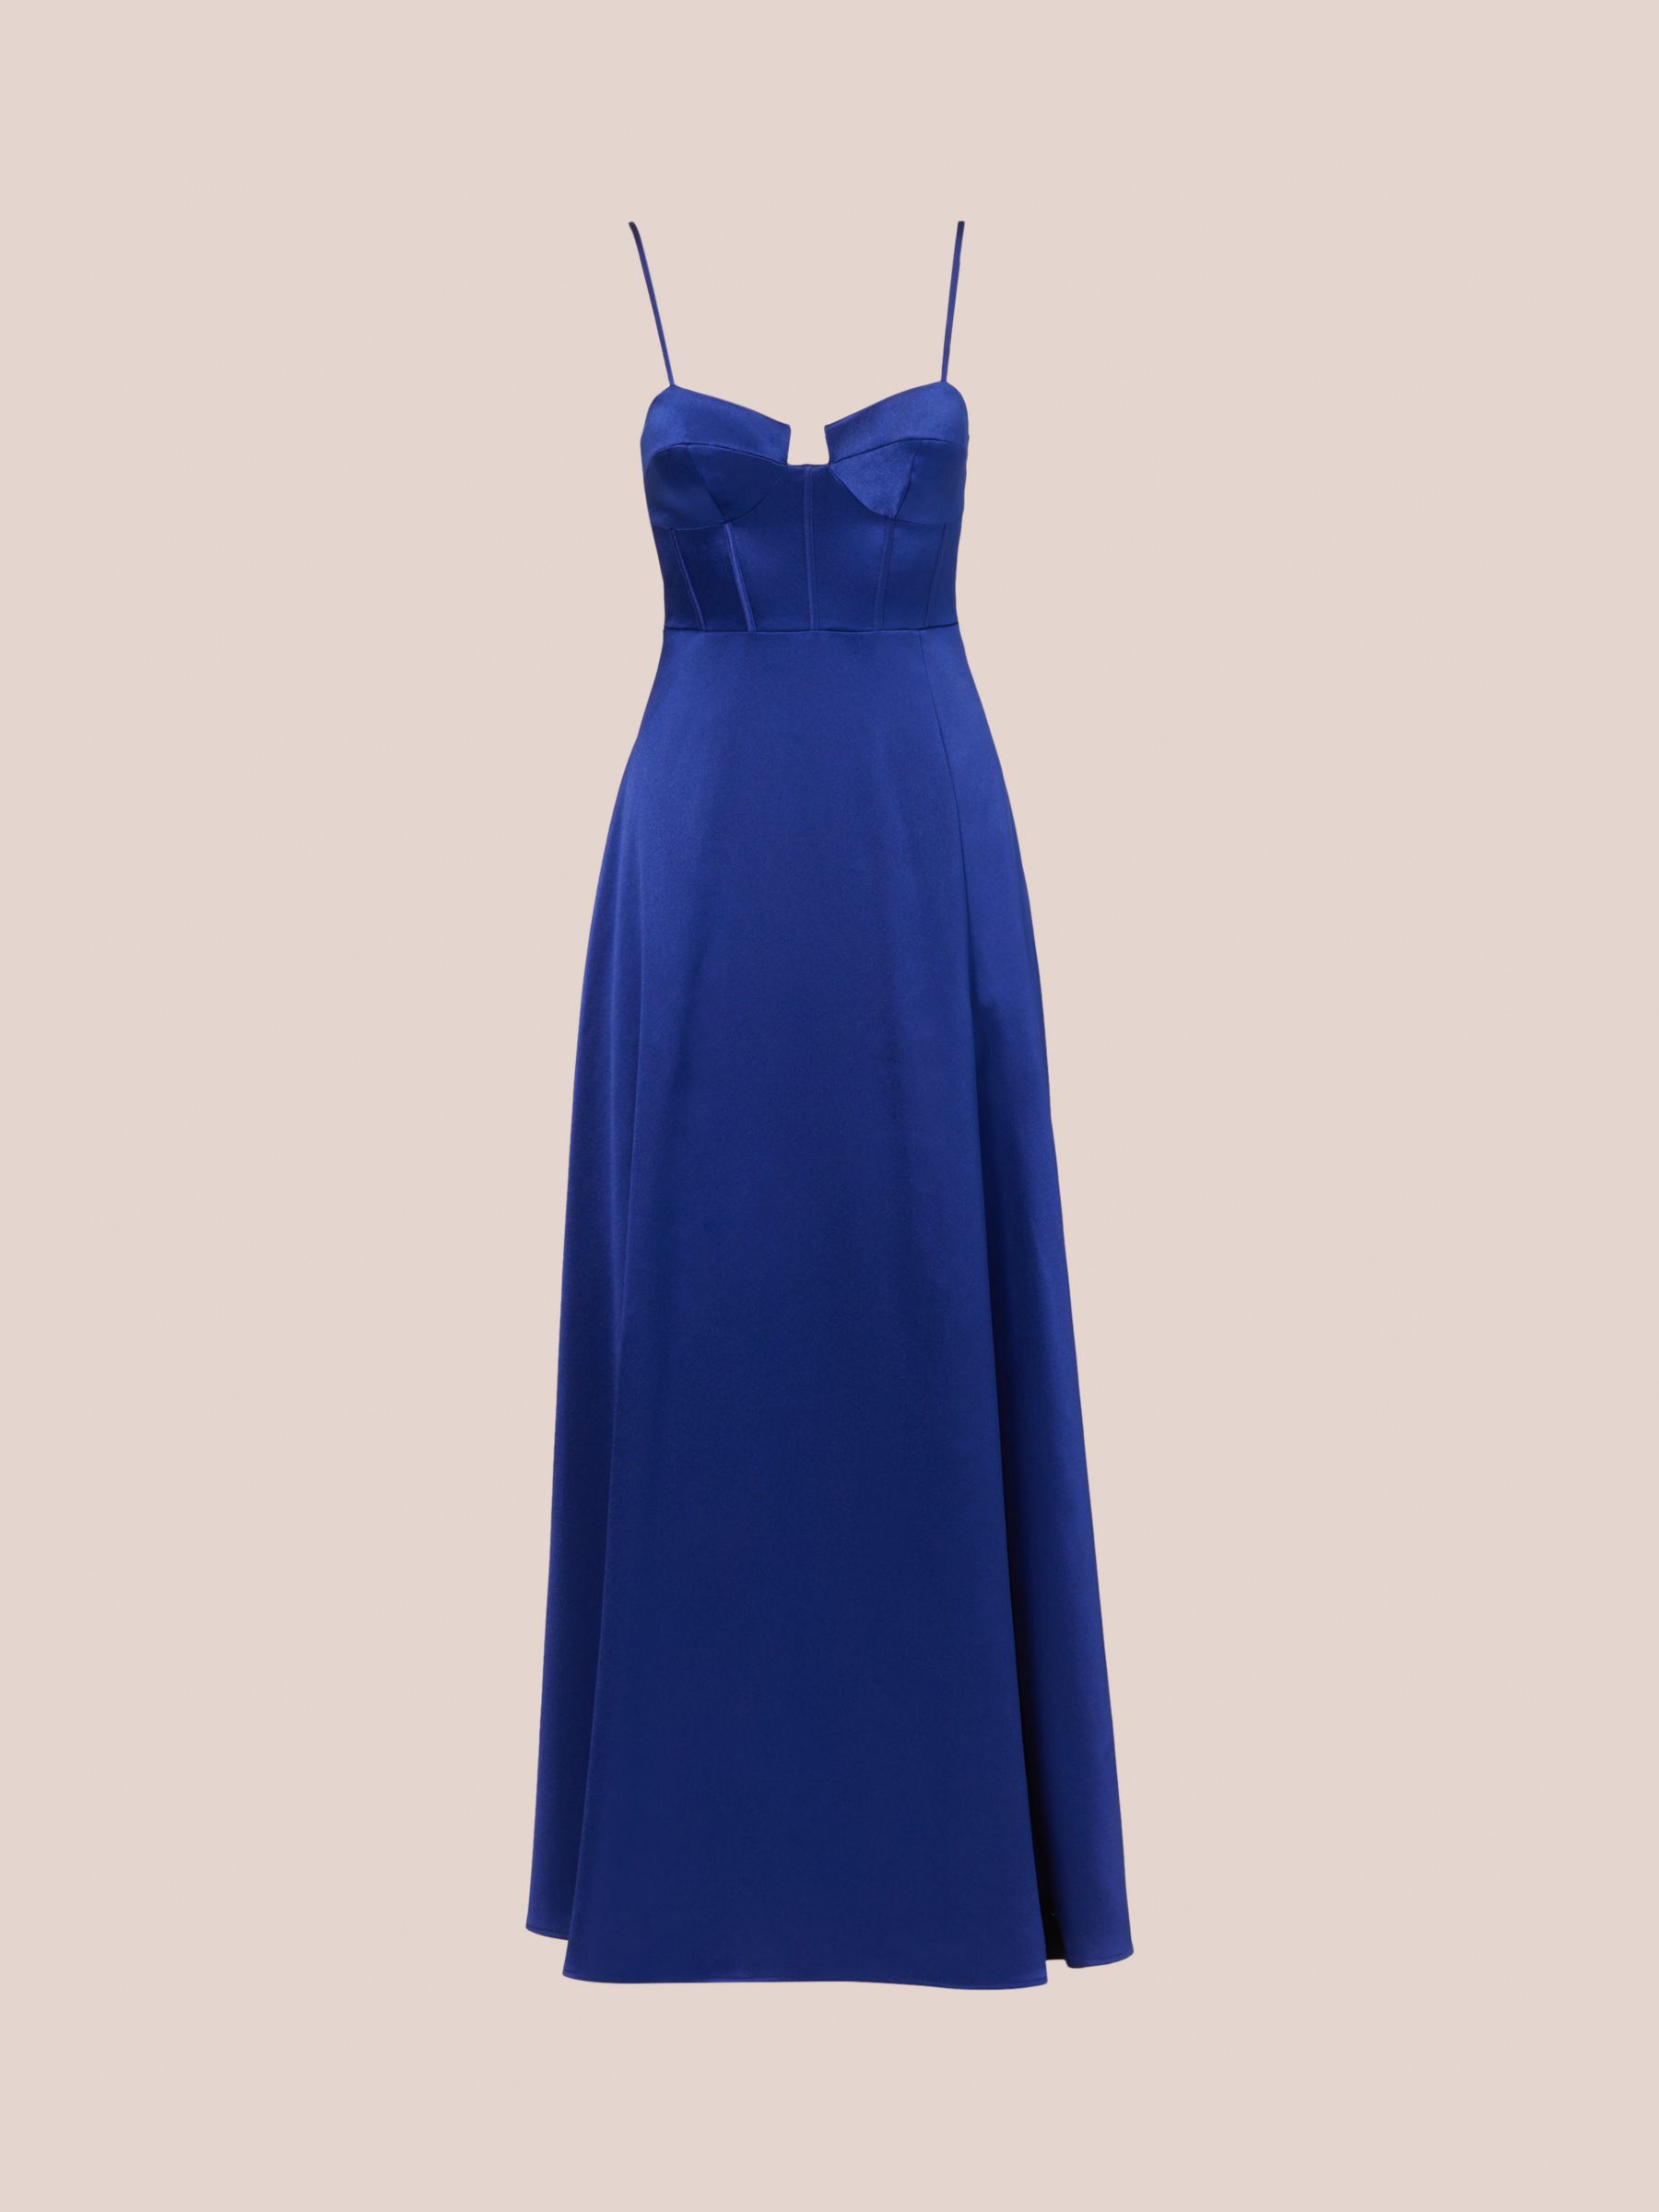 Adrianna by Adrianna Papell Liquid Satin Bustier Maxi Dress, Royal Sapphire, 6